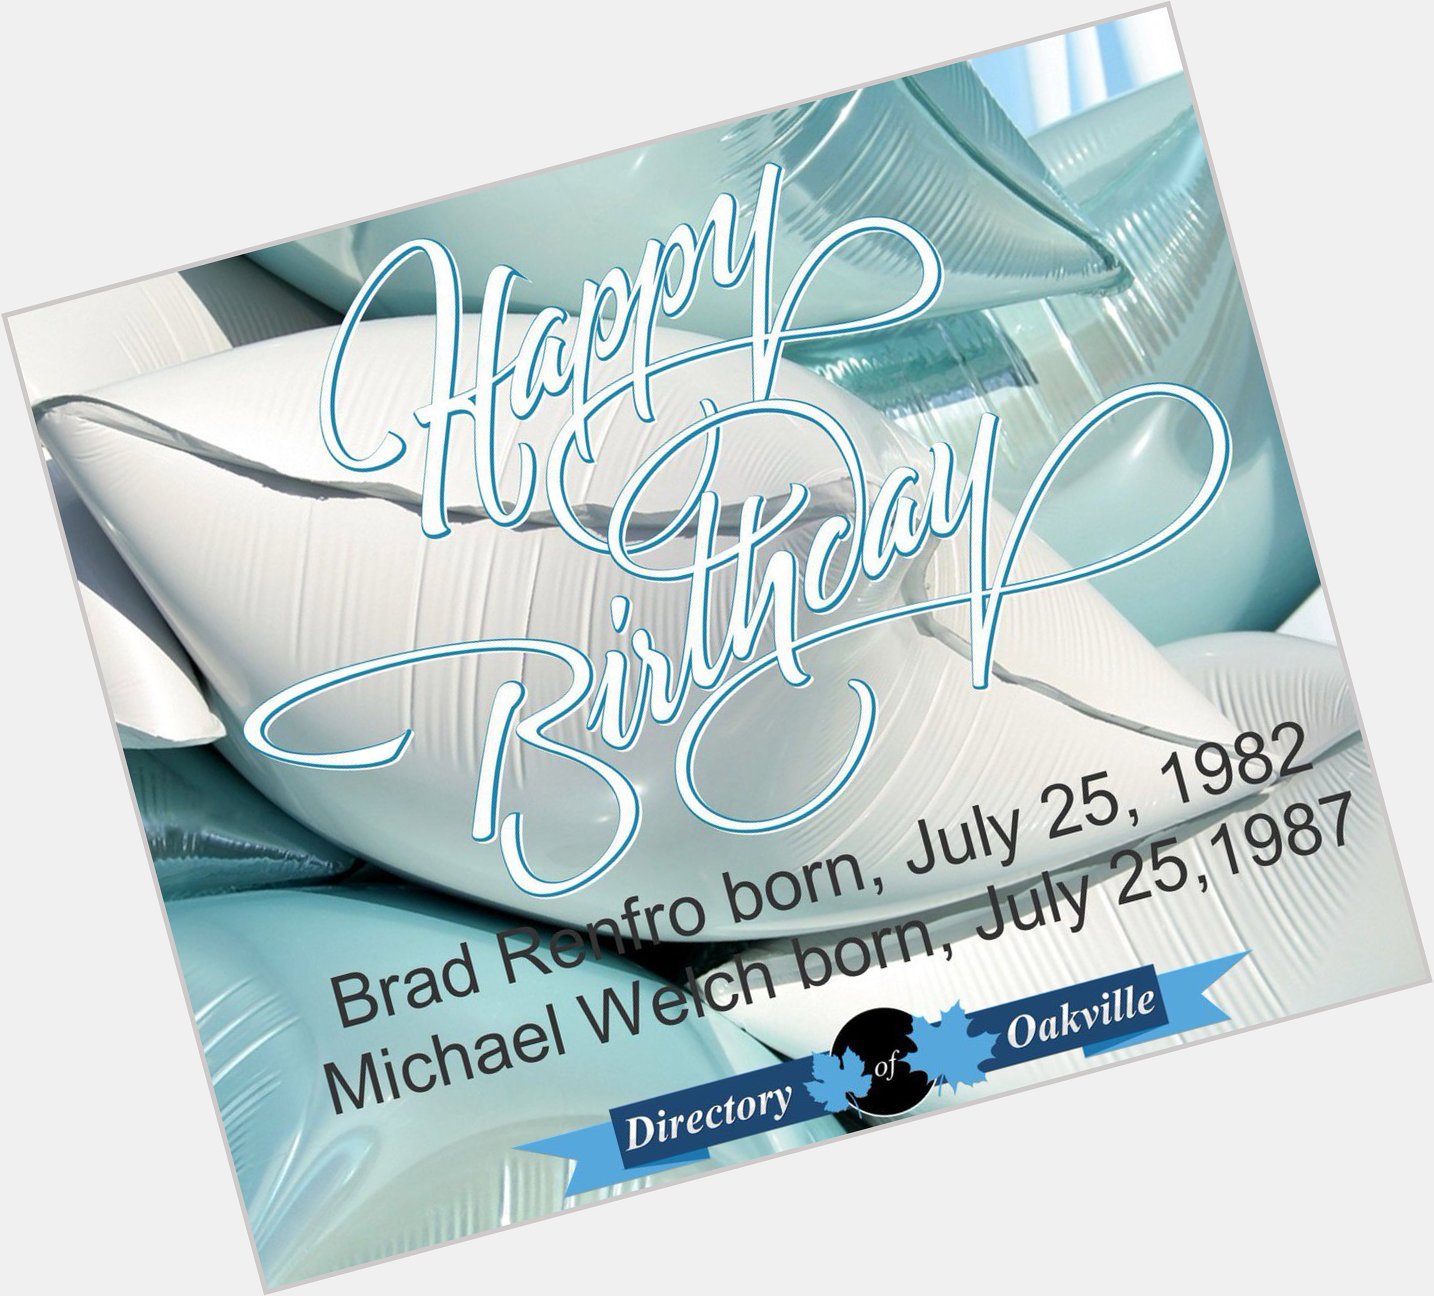 Happy Birthday!

Brad Renfro born, July 25, 1982
Michael Welch born, July 25,1987 